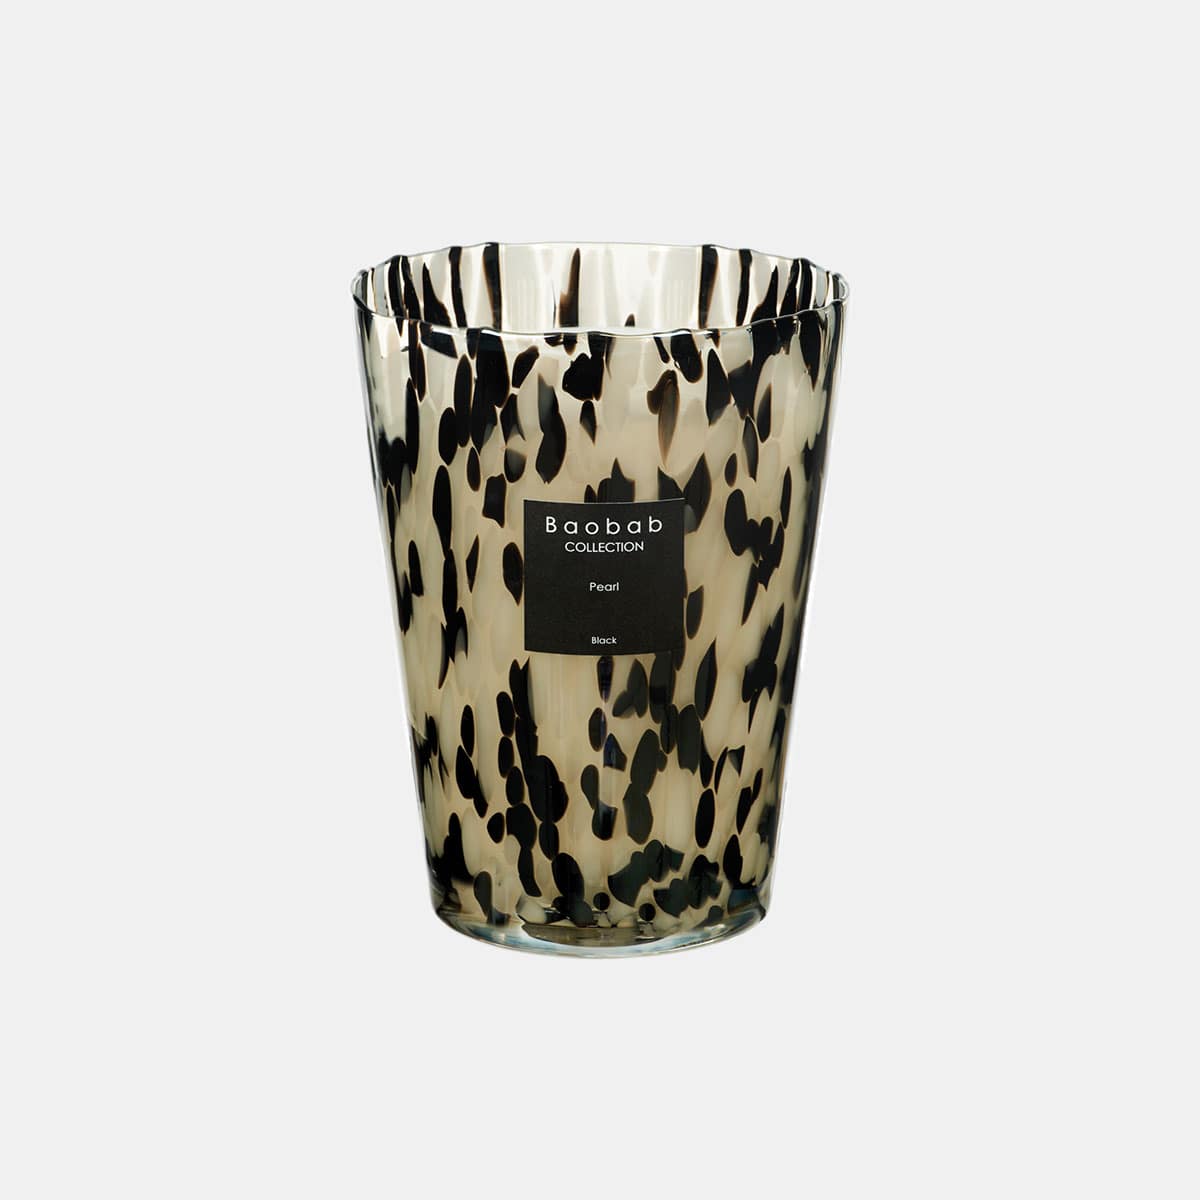 echo natuurlijk Betsy Trotwood Baobab Collection Black Pearls Kaars – Design Oostende